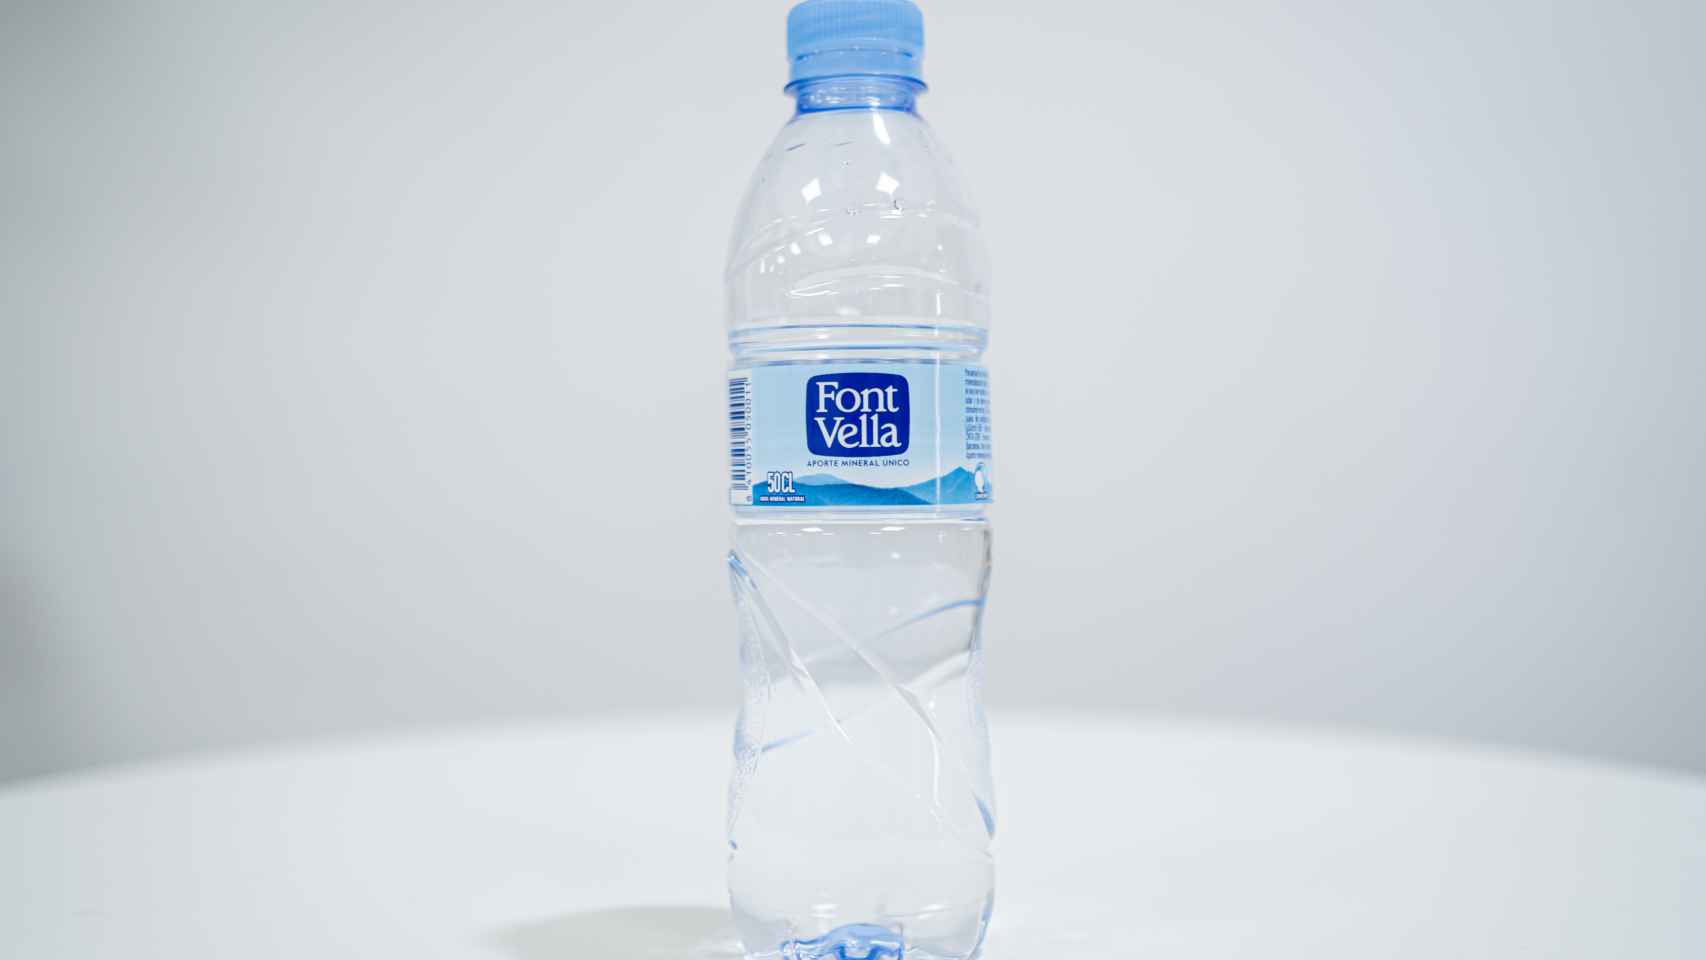 La botella de medio litro de Font Vella.